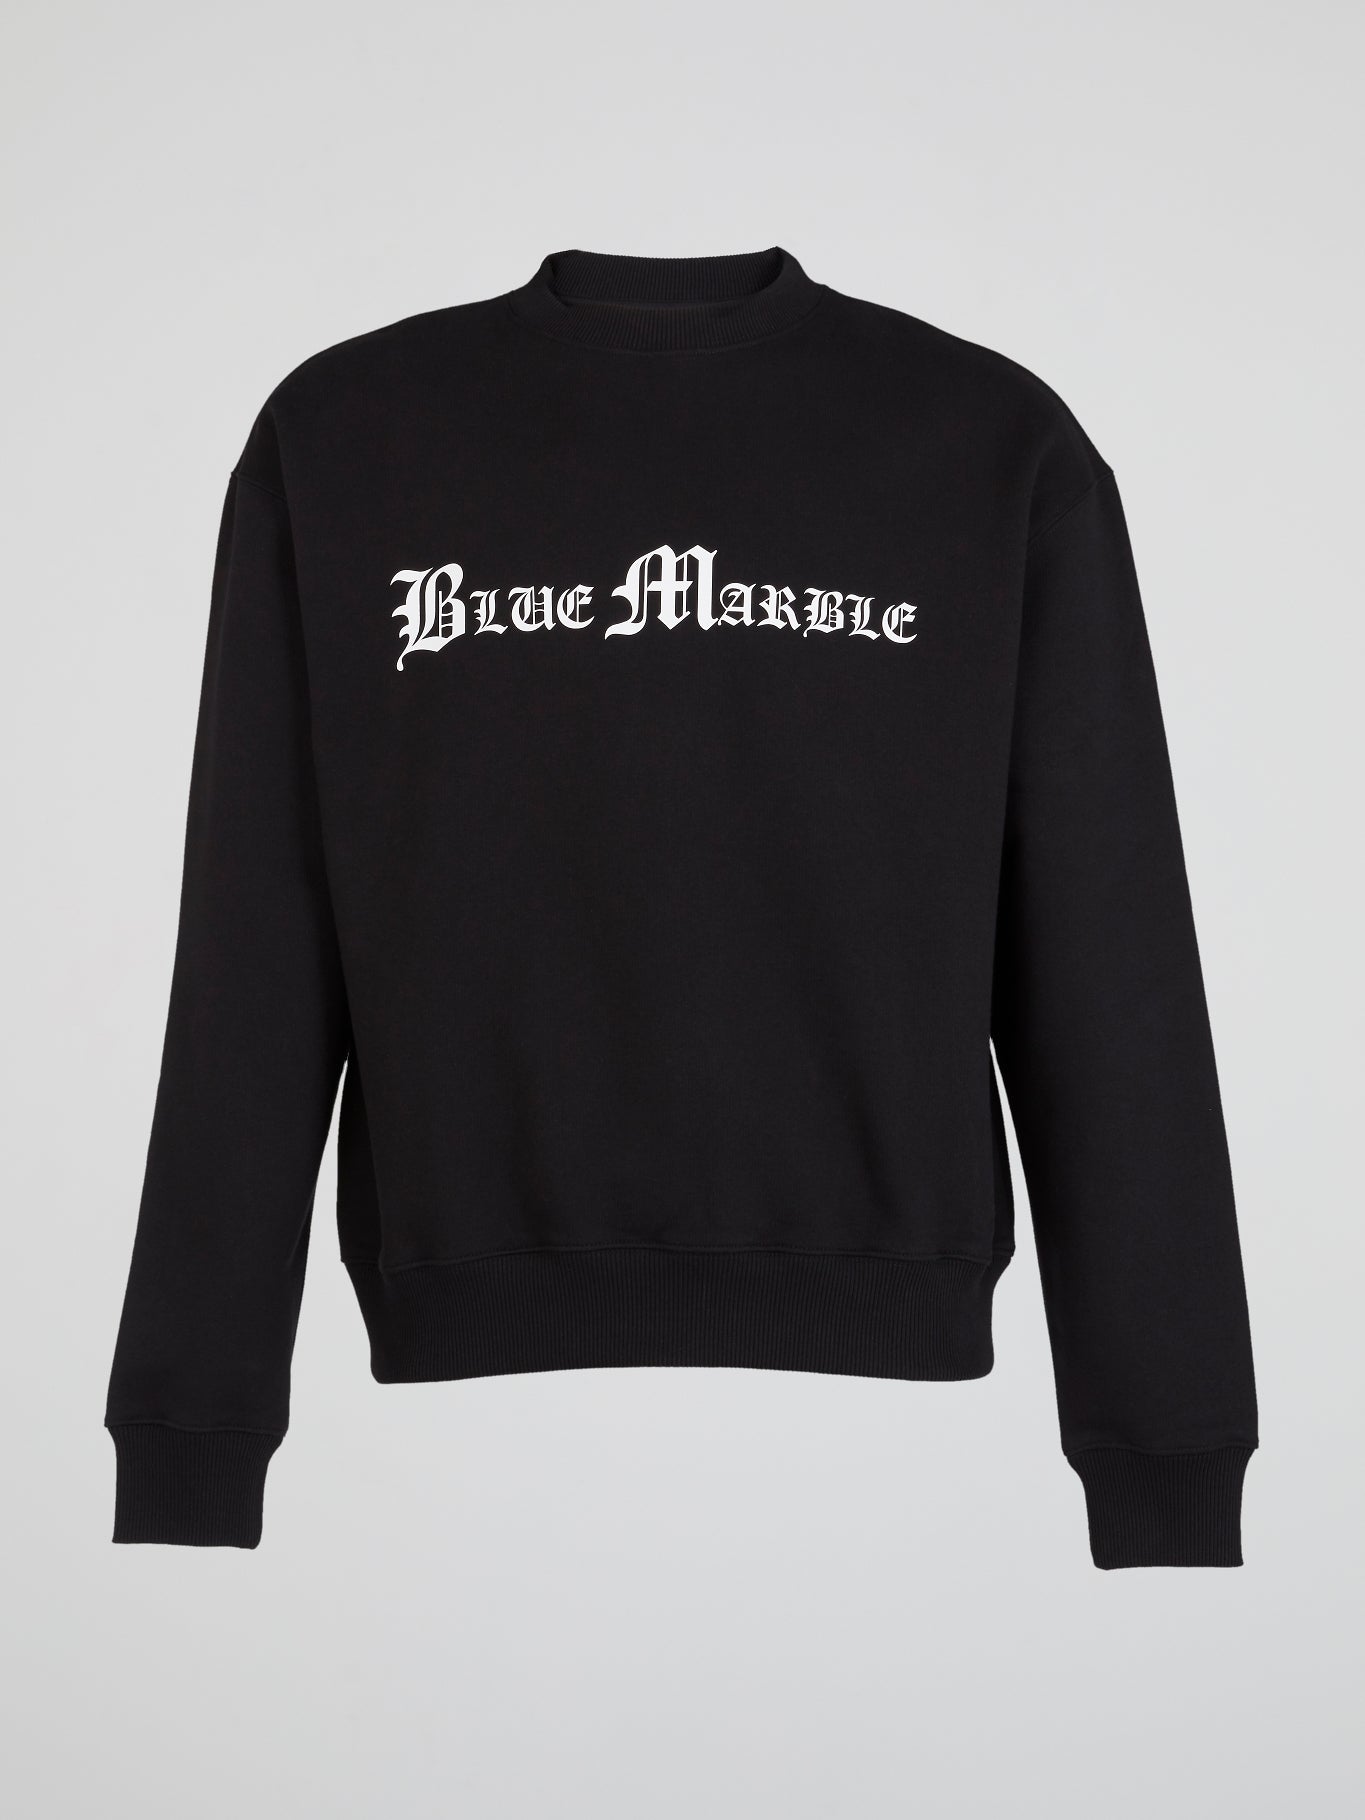 Black Statement Crewneck Sweatshirts